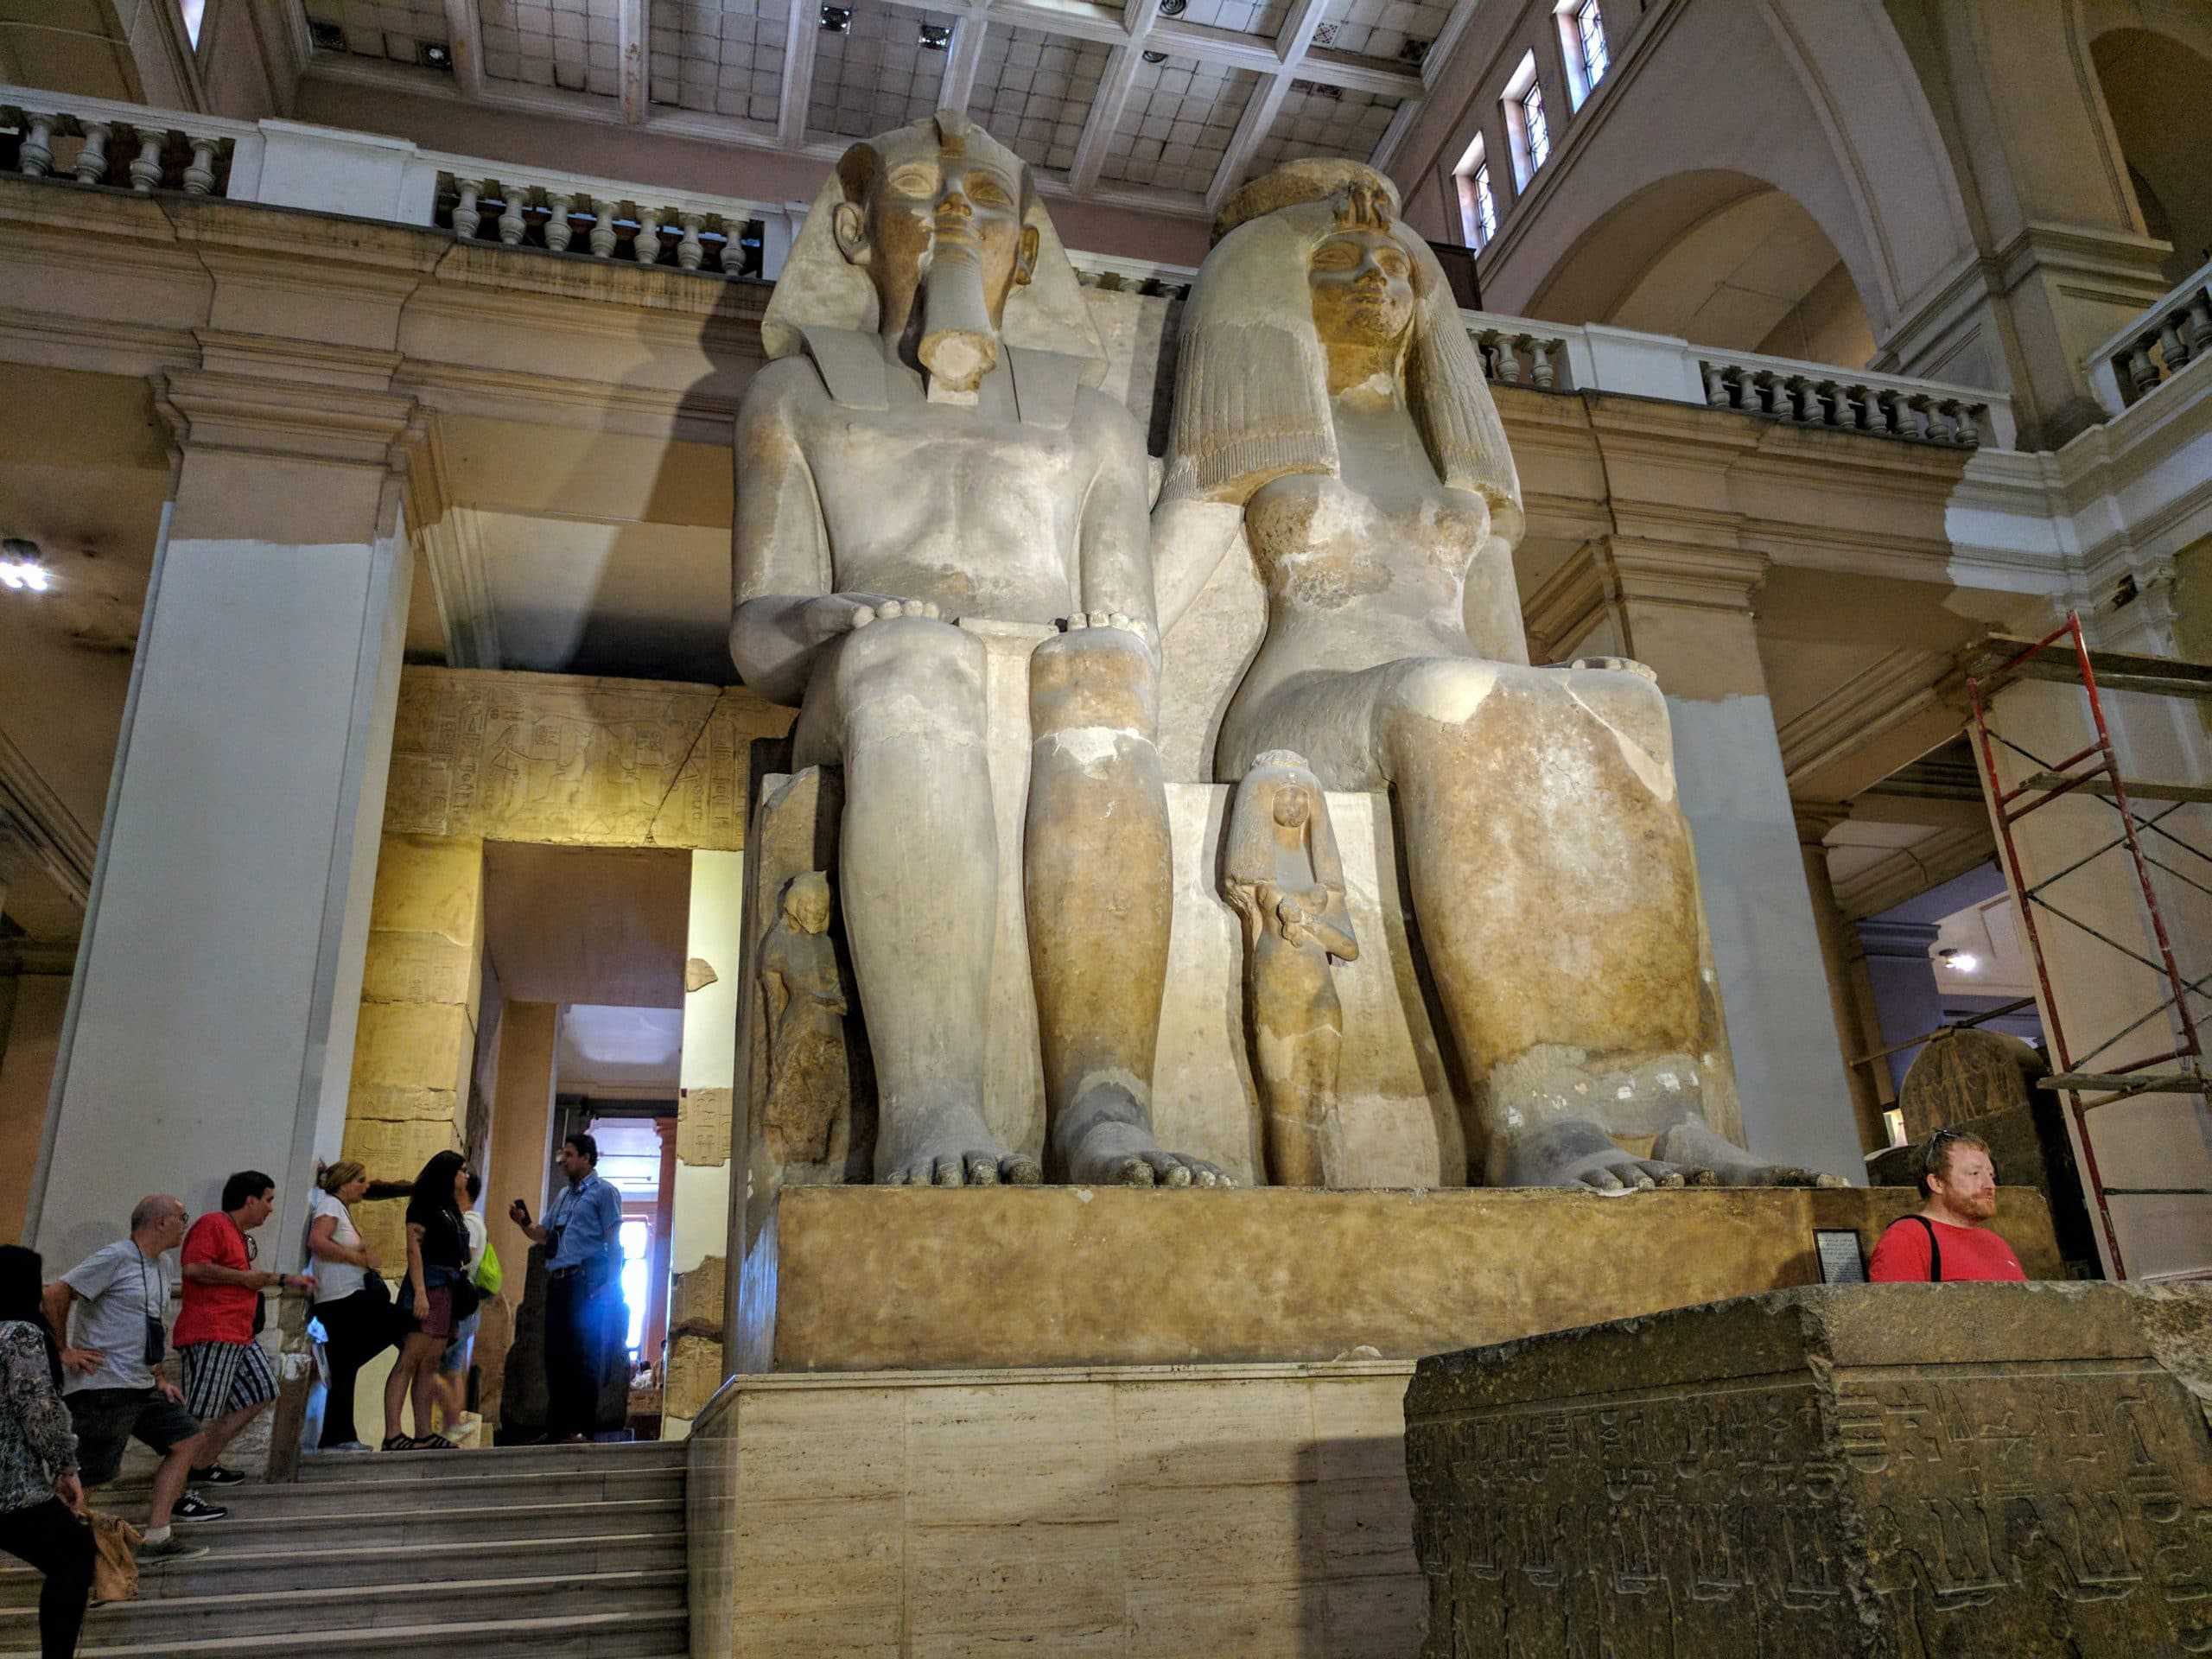 Inside the Cairo Museum.